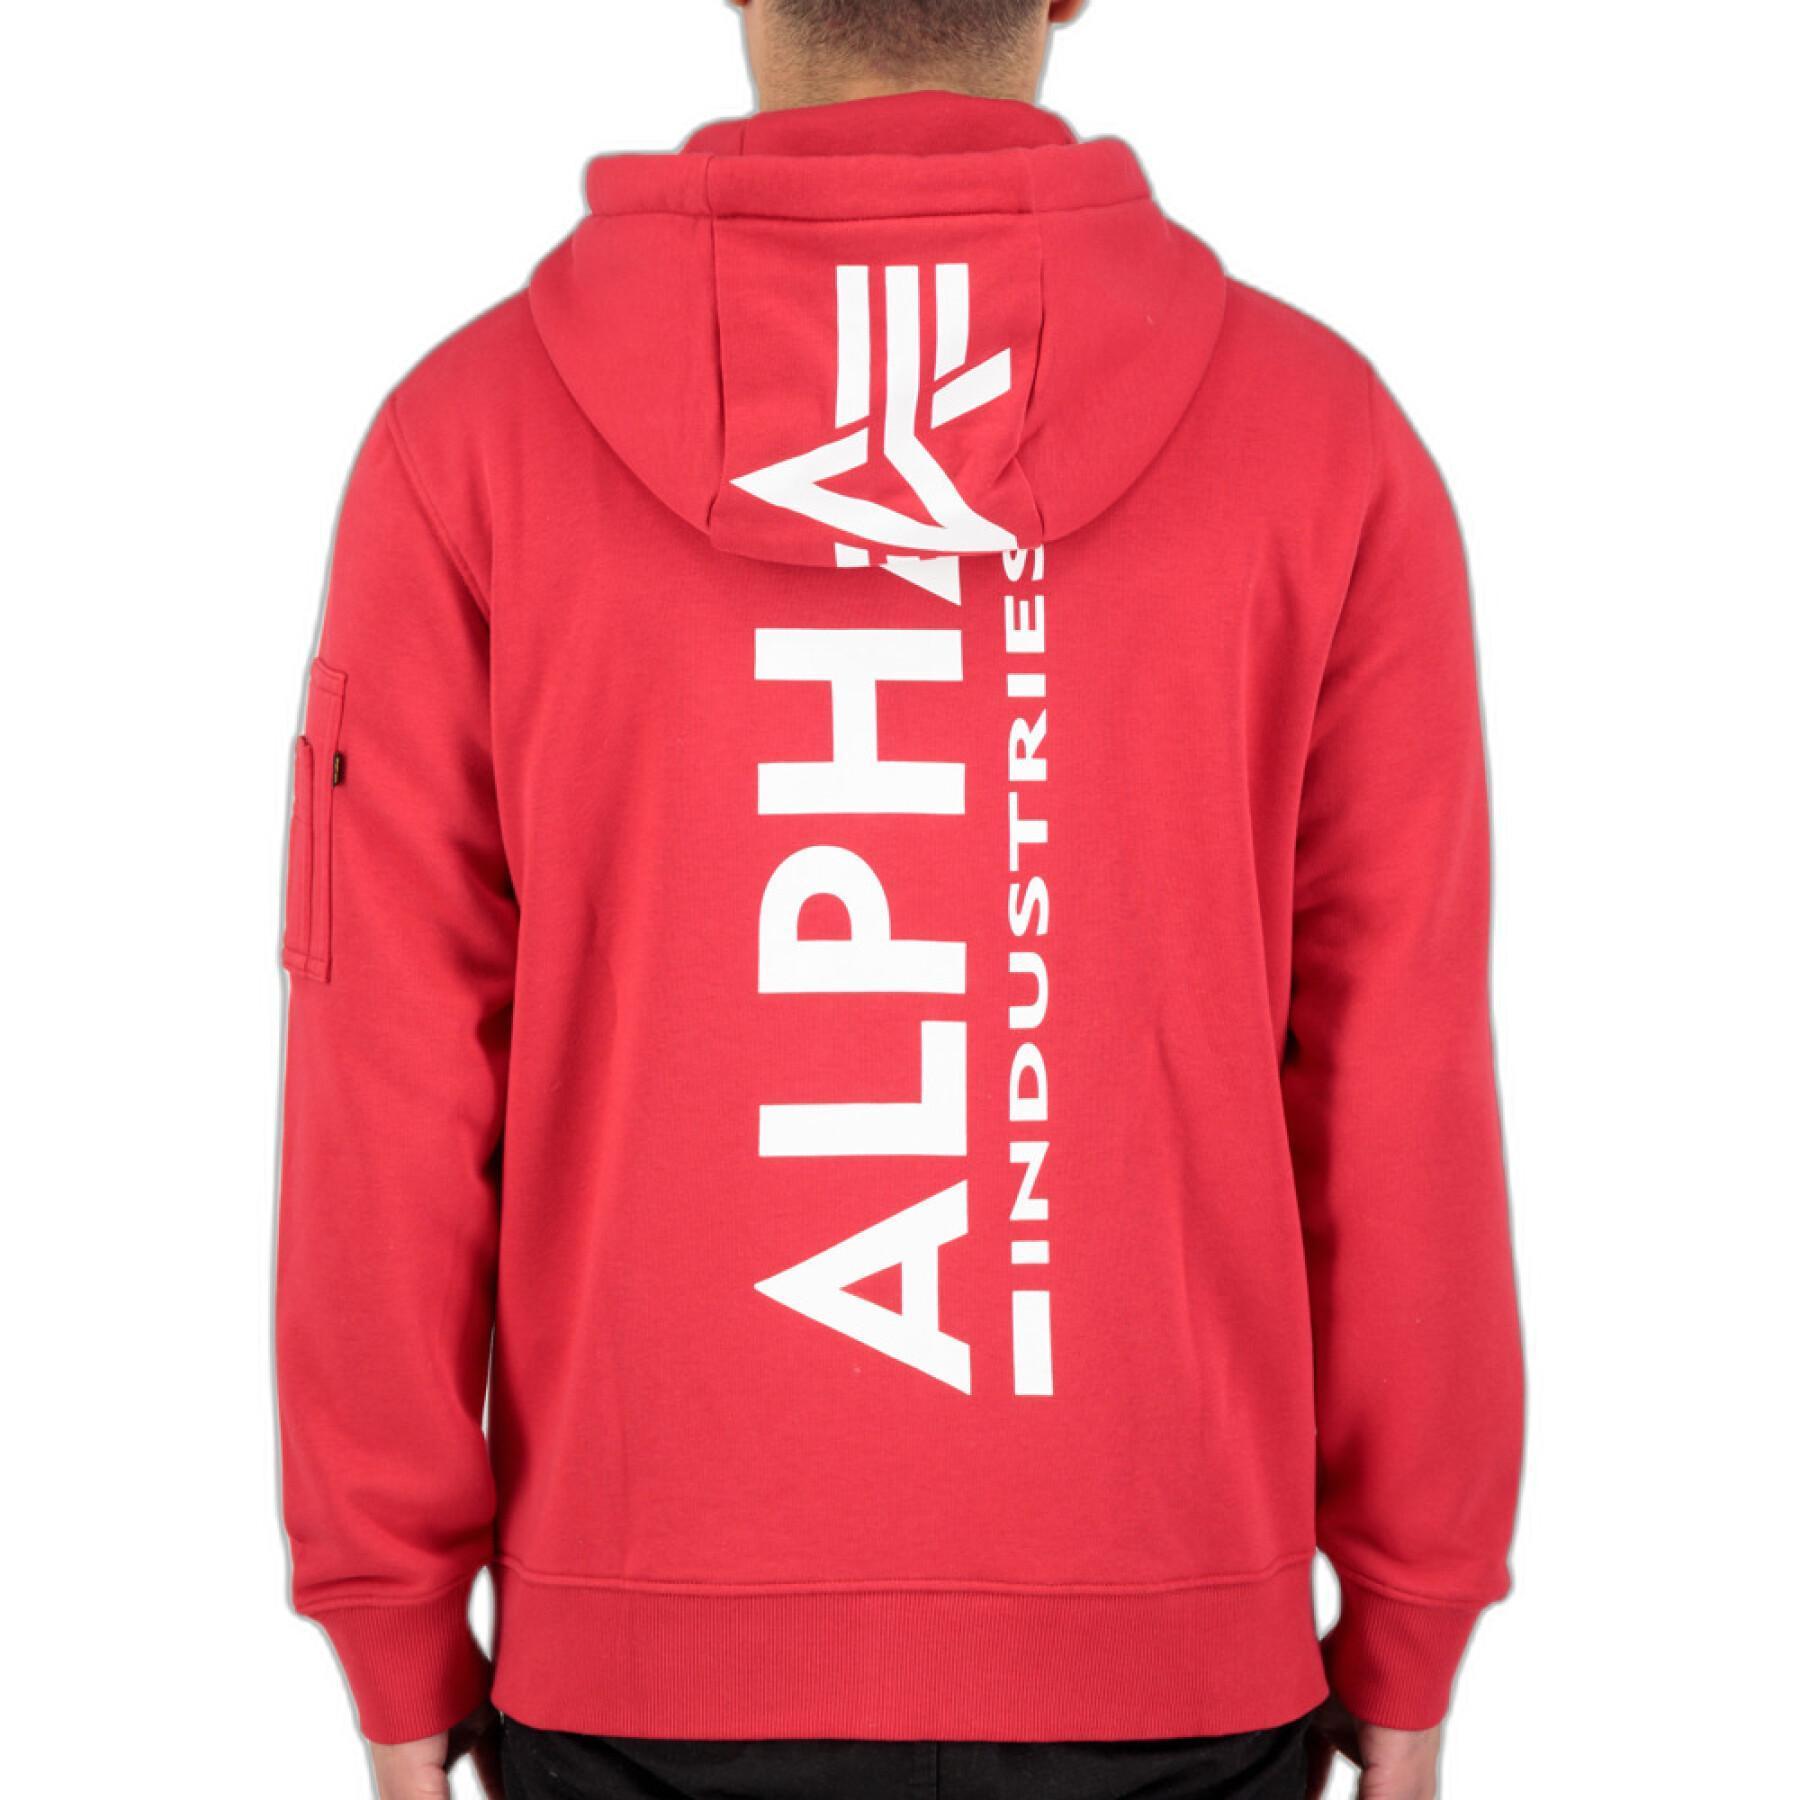 Sweatshirt zíper com capuz impresso no verso Alpha Industries